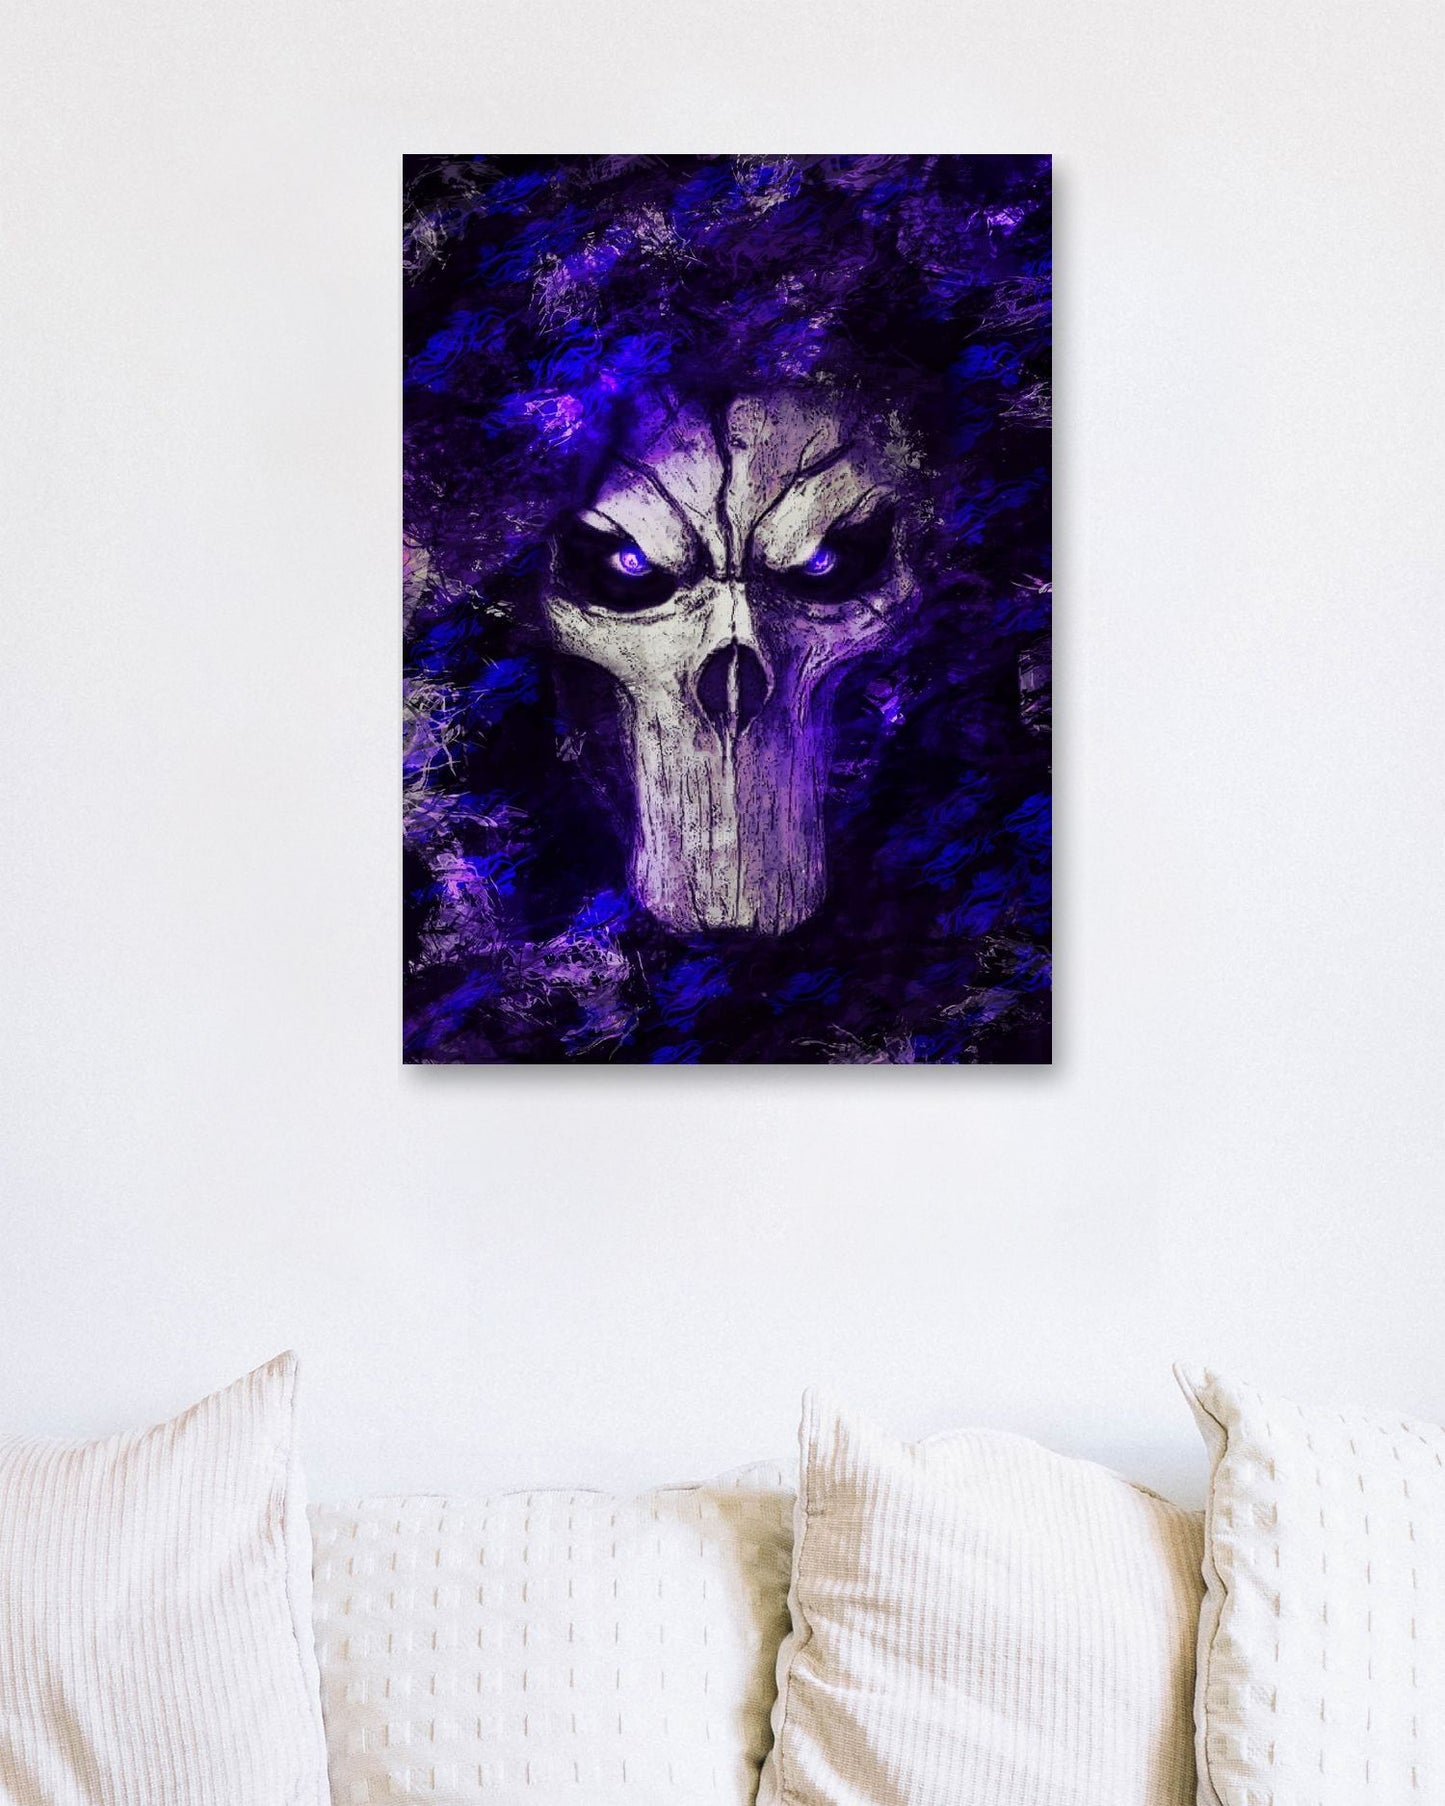 Darksiders 2 Death mask purple fantasy - @SyanArt